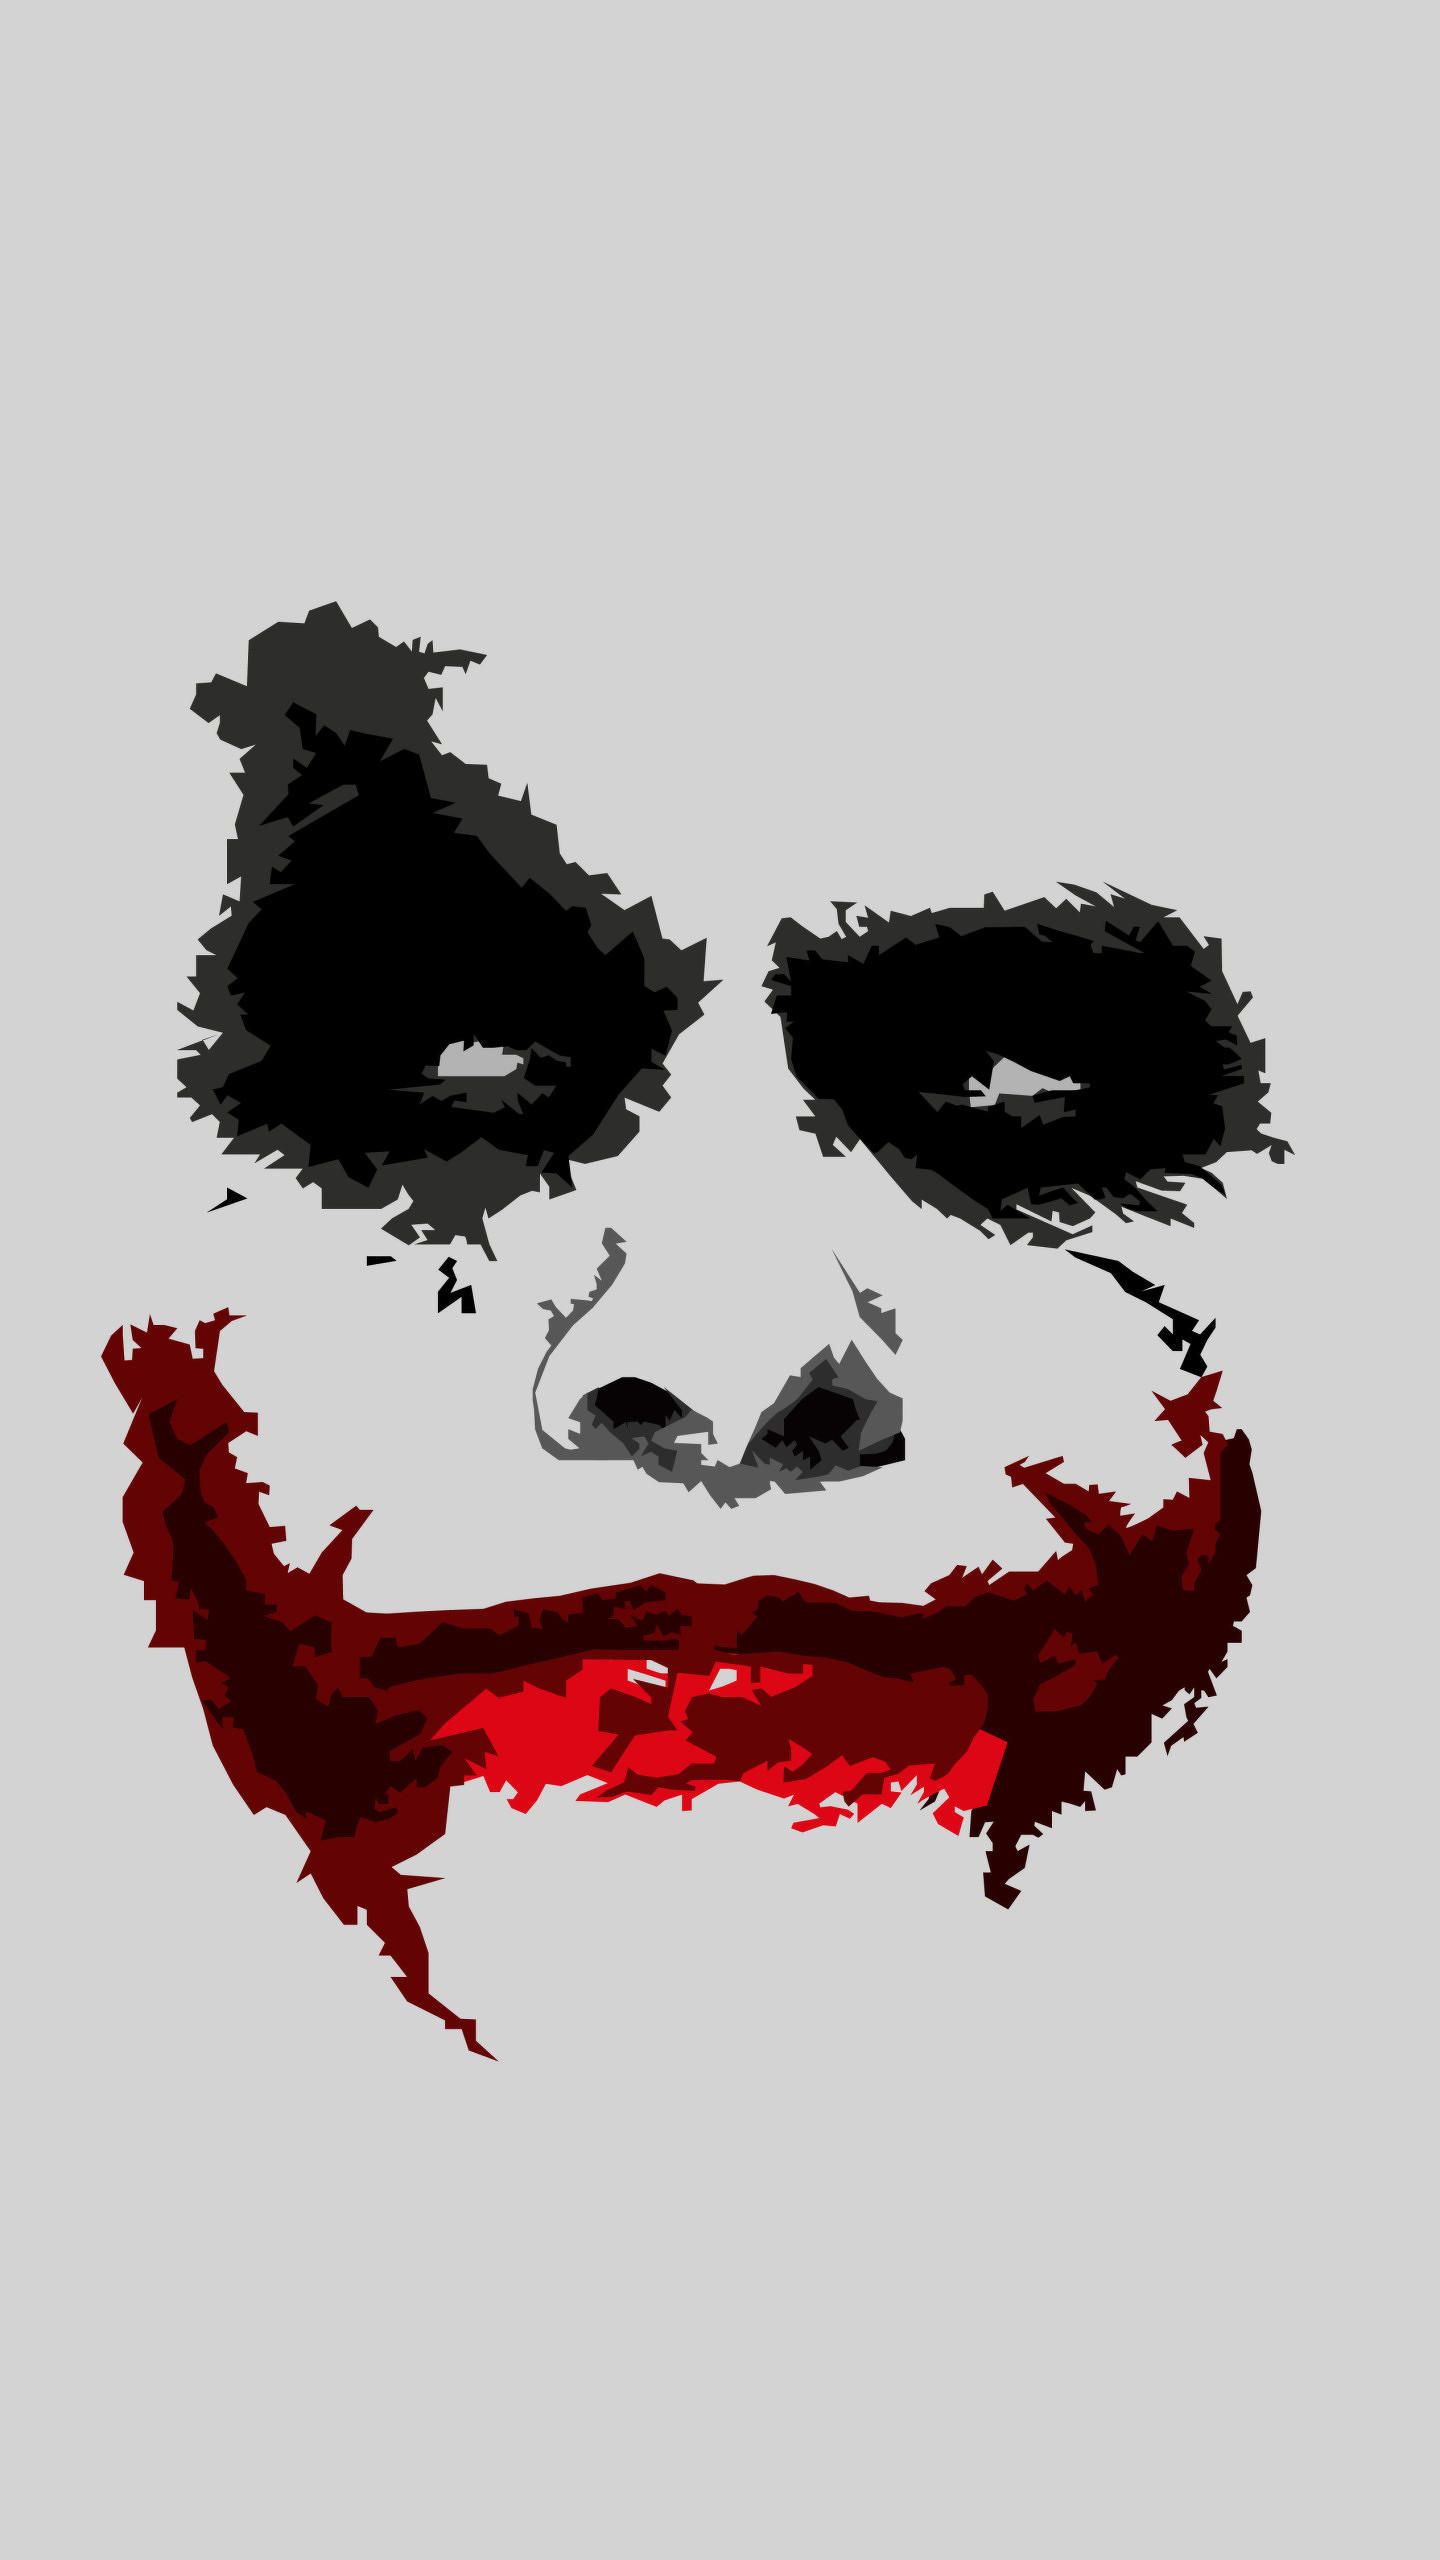 Download 1440x2560 Resolution of Joker, HD, 4K, 5K, 8K, Minimalism, Artist, Artwork,. Joker iphone wallpaper, Joker wallpaper, Joker drawings